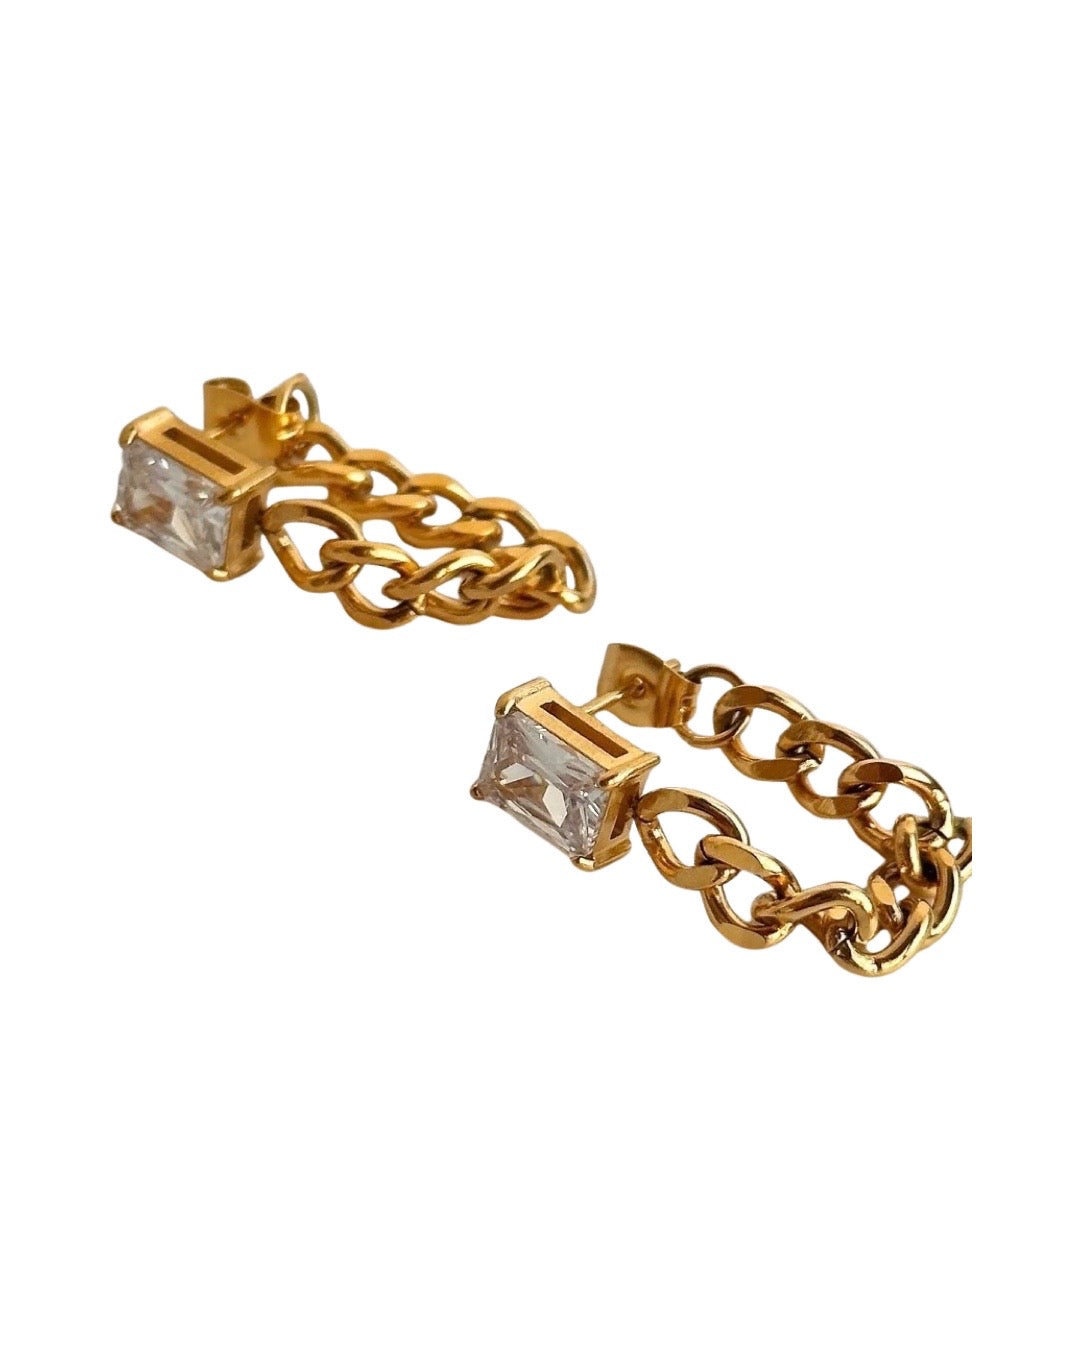 The Gold Diamond Chain Earrings